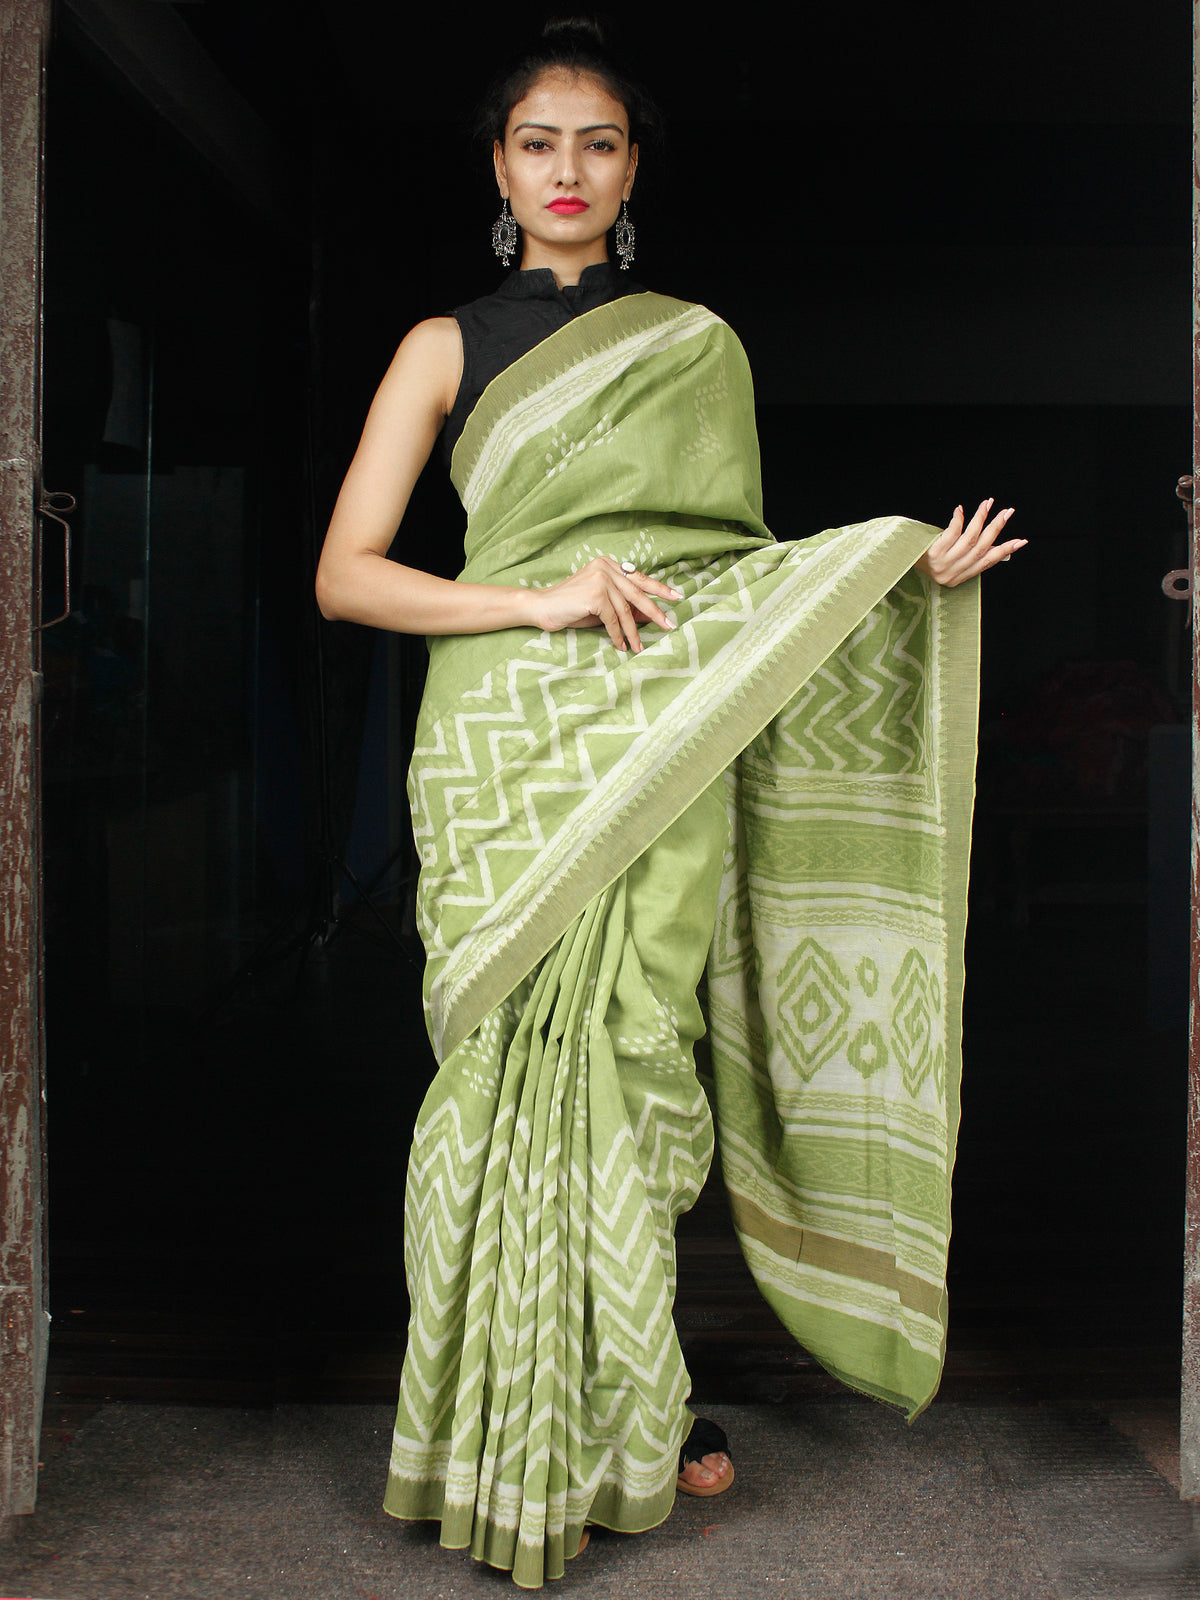 Green Ivory Chanderi Silk Hand Block Printed Saree With Geecha Border - S031704009